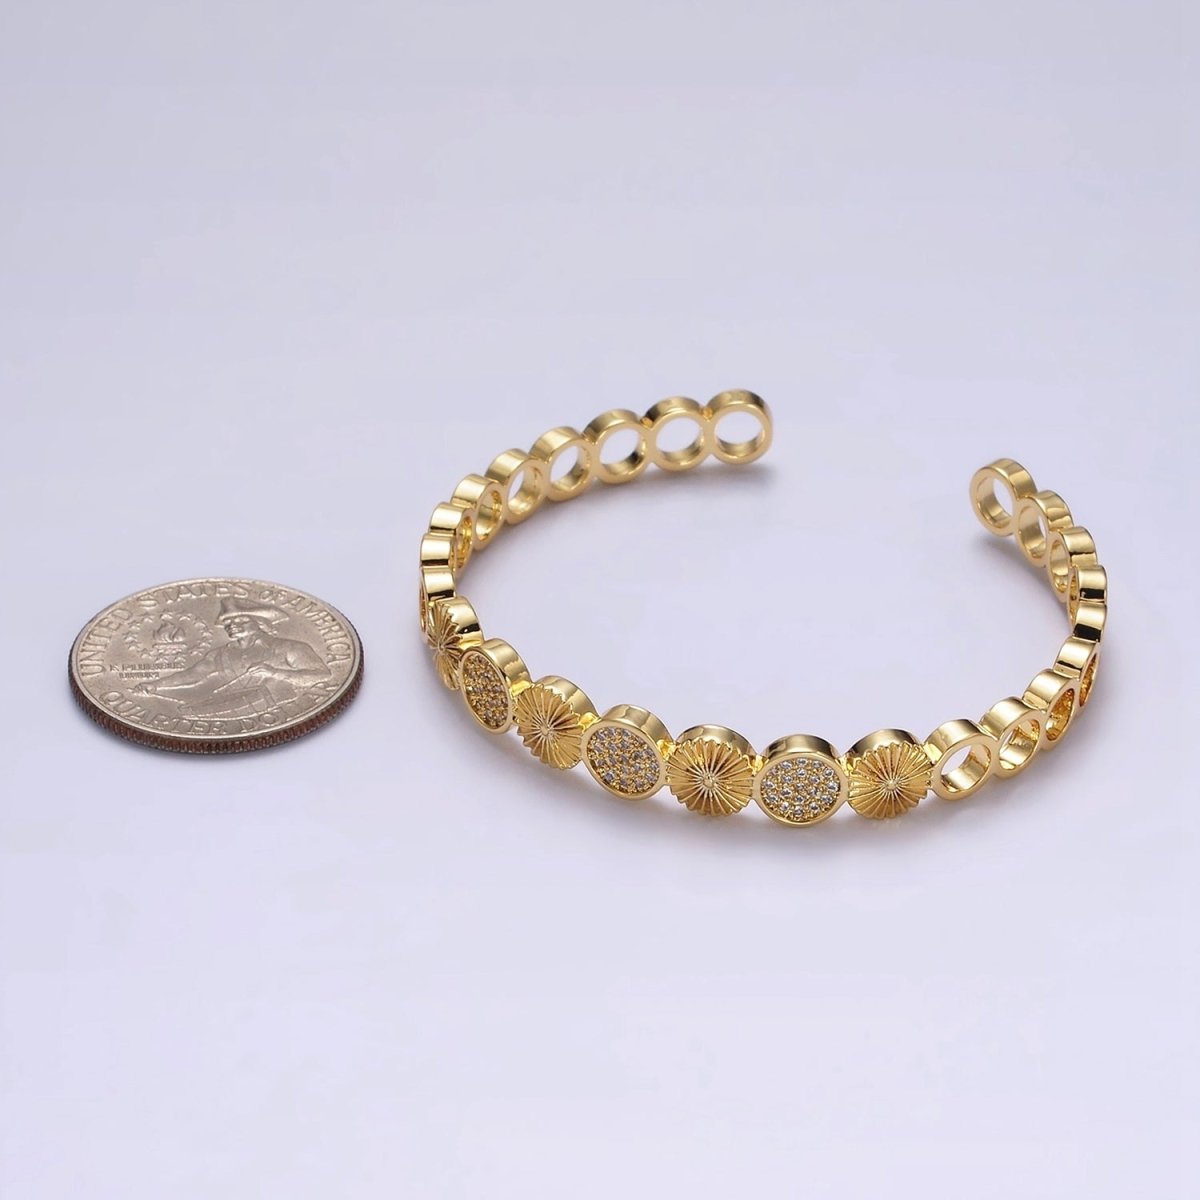 14K Gold Filled Sunflower Sunburst Textured Micro Paved CZ Round Cuff Bangle Bracelet in Silver & Gold | WA-1933 WA-1934 Clearance Pricing - DLUXCA